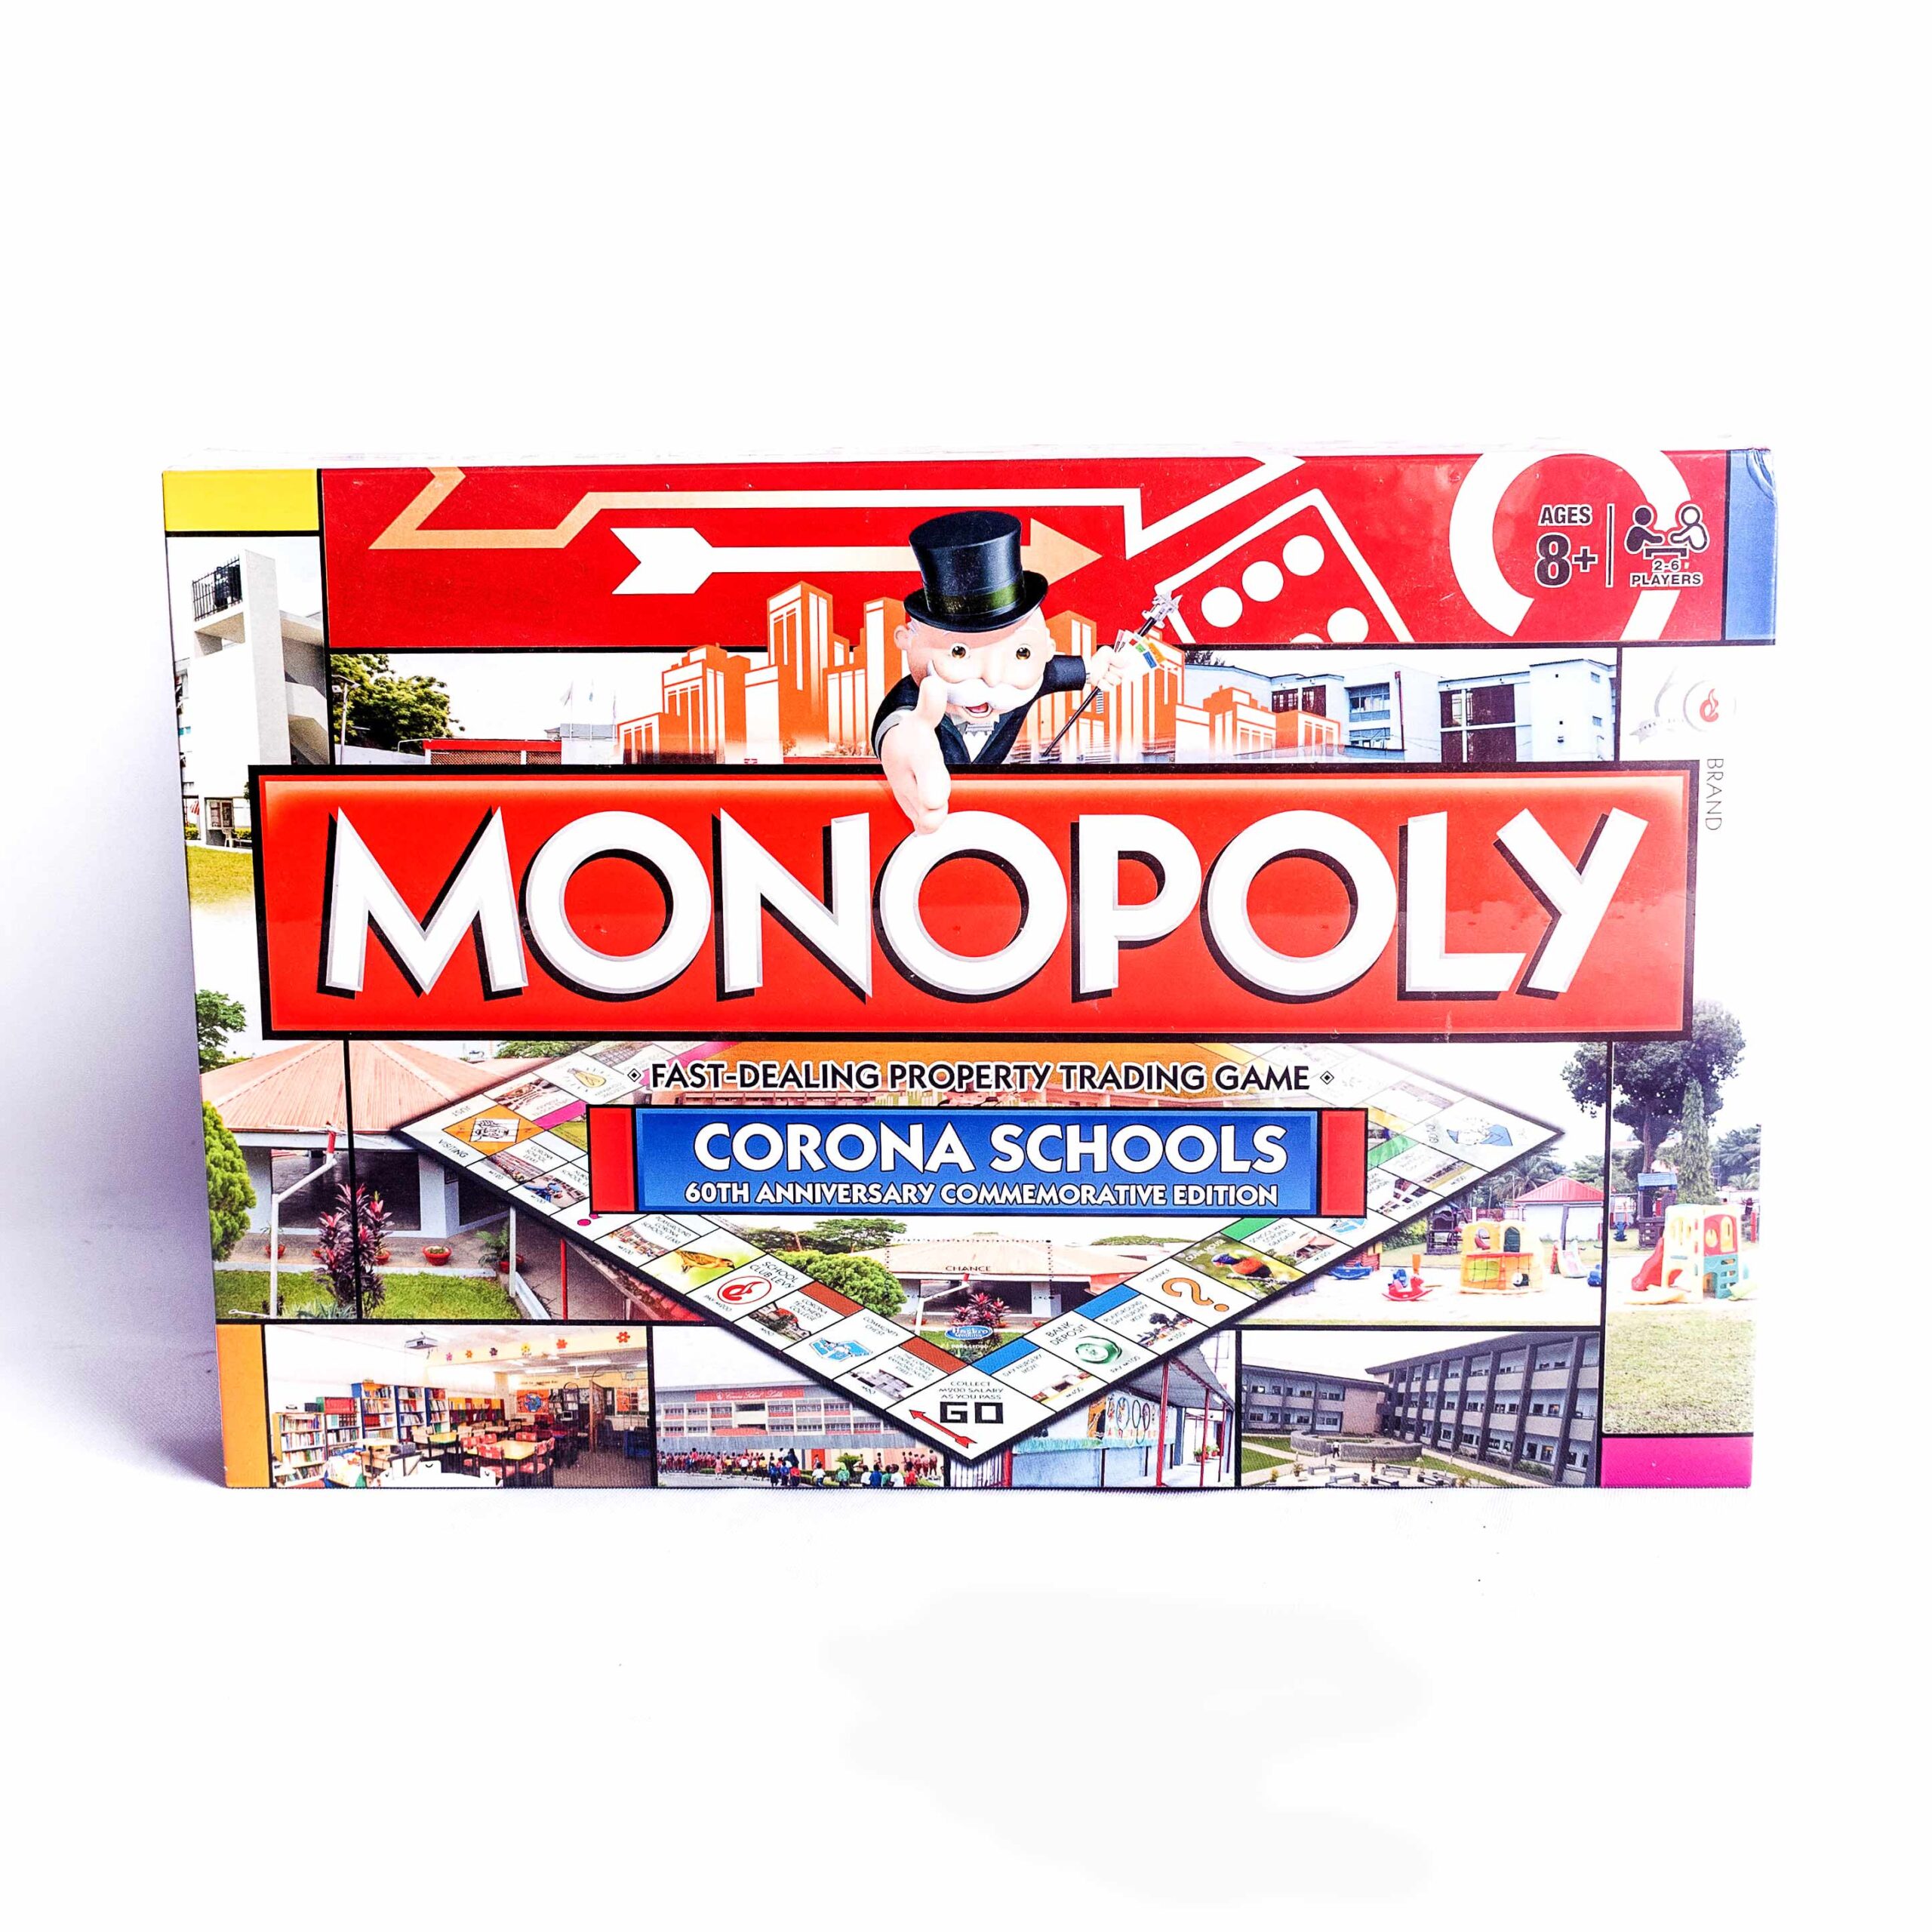 Corona Monopoly board game